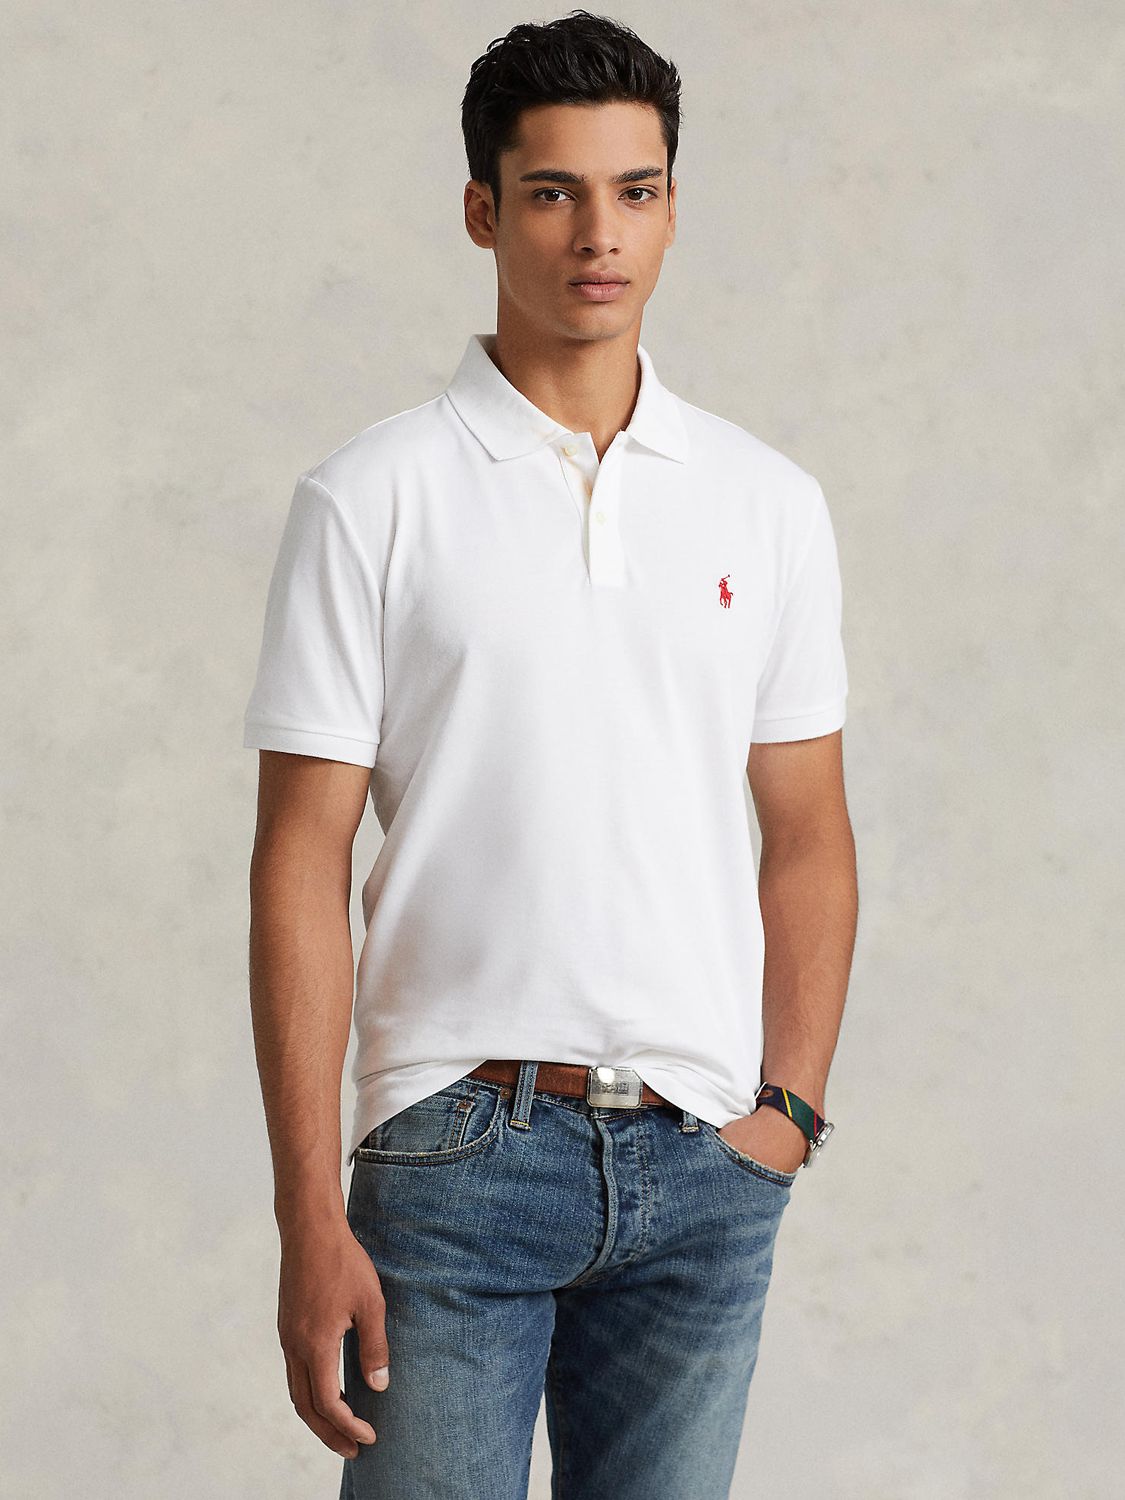 telex Stijg Afwijzen Polo Golf by Ralph Lauren Polo Shirt, Pure White at John Lewis & Partners